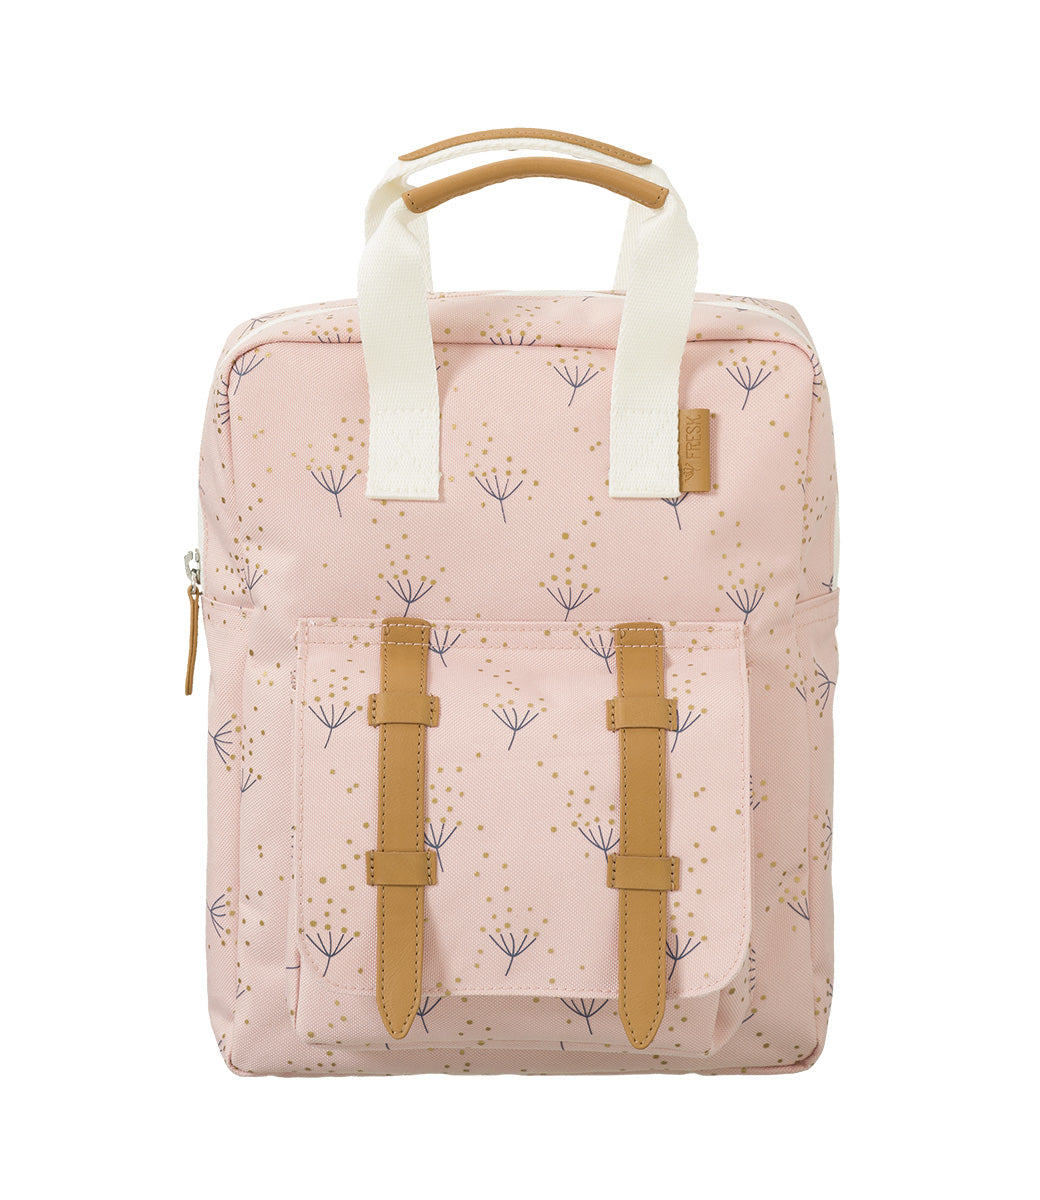 Fresk backpack // Dandelion